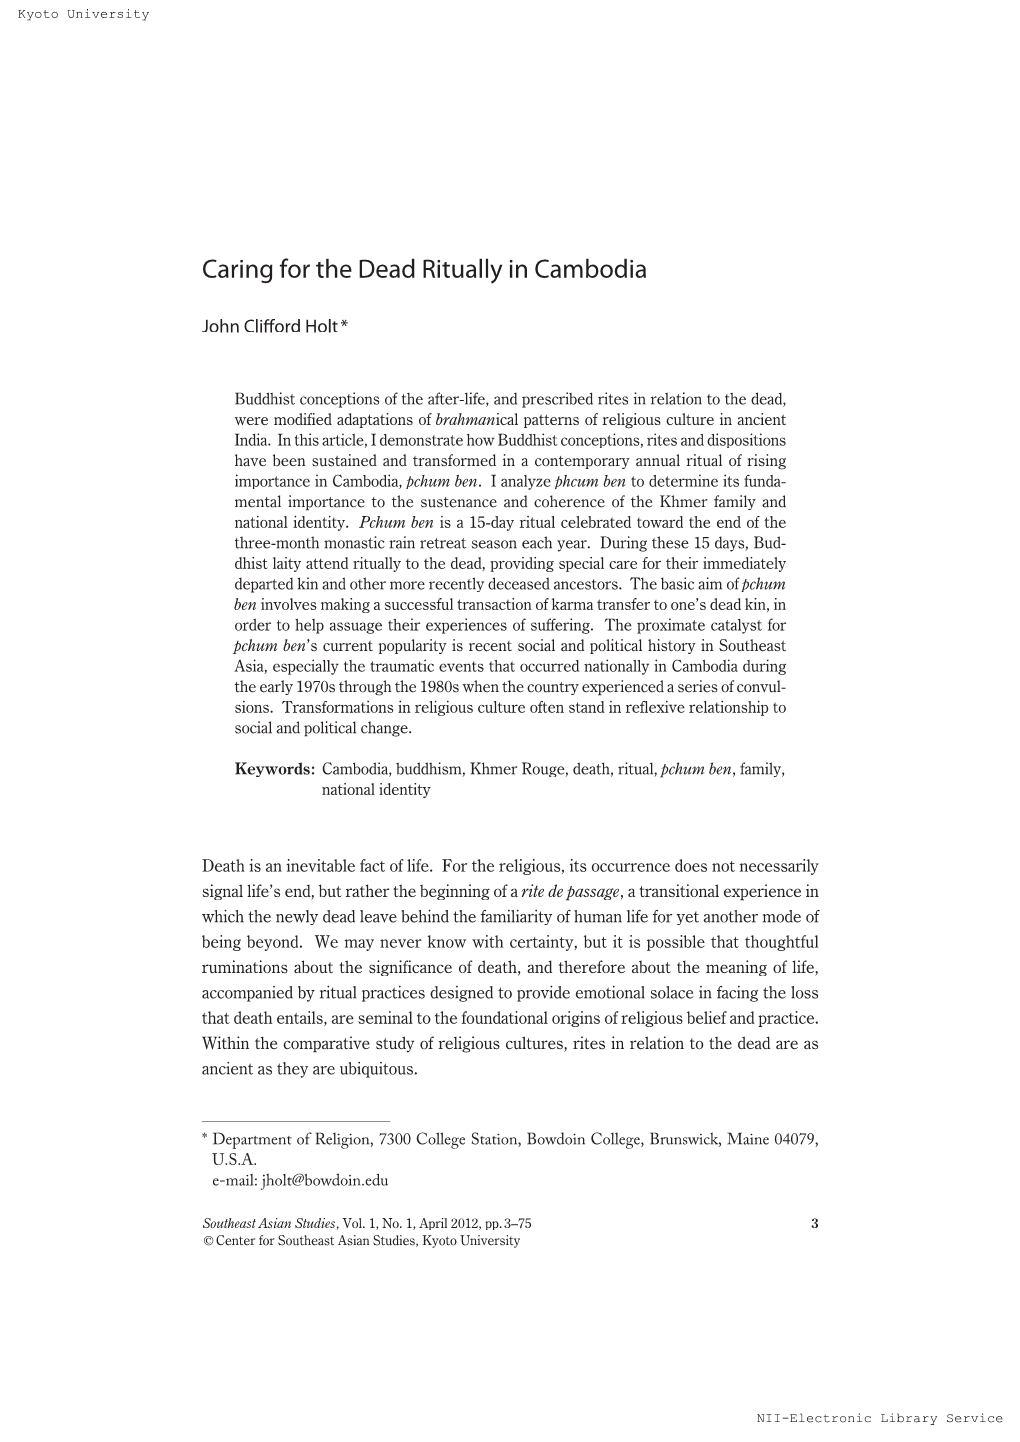 Caring for the Dead Ritually in Cambodia